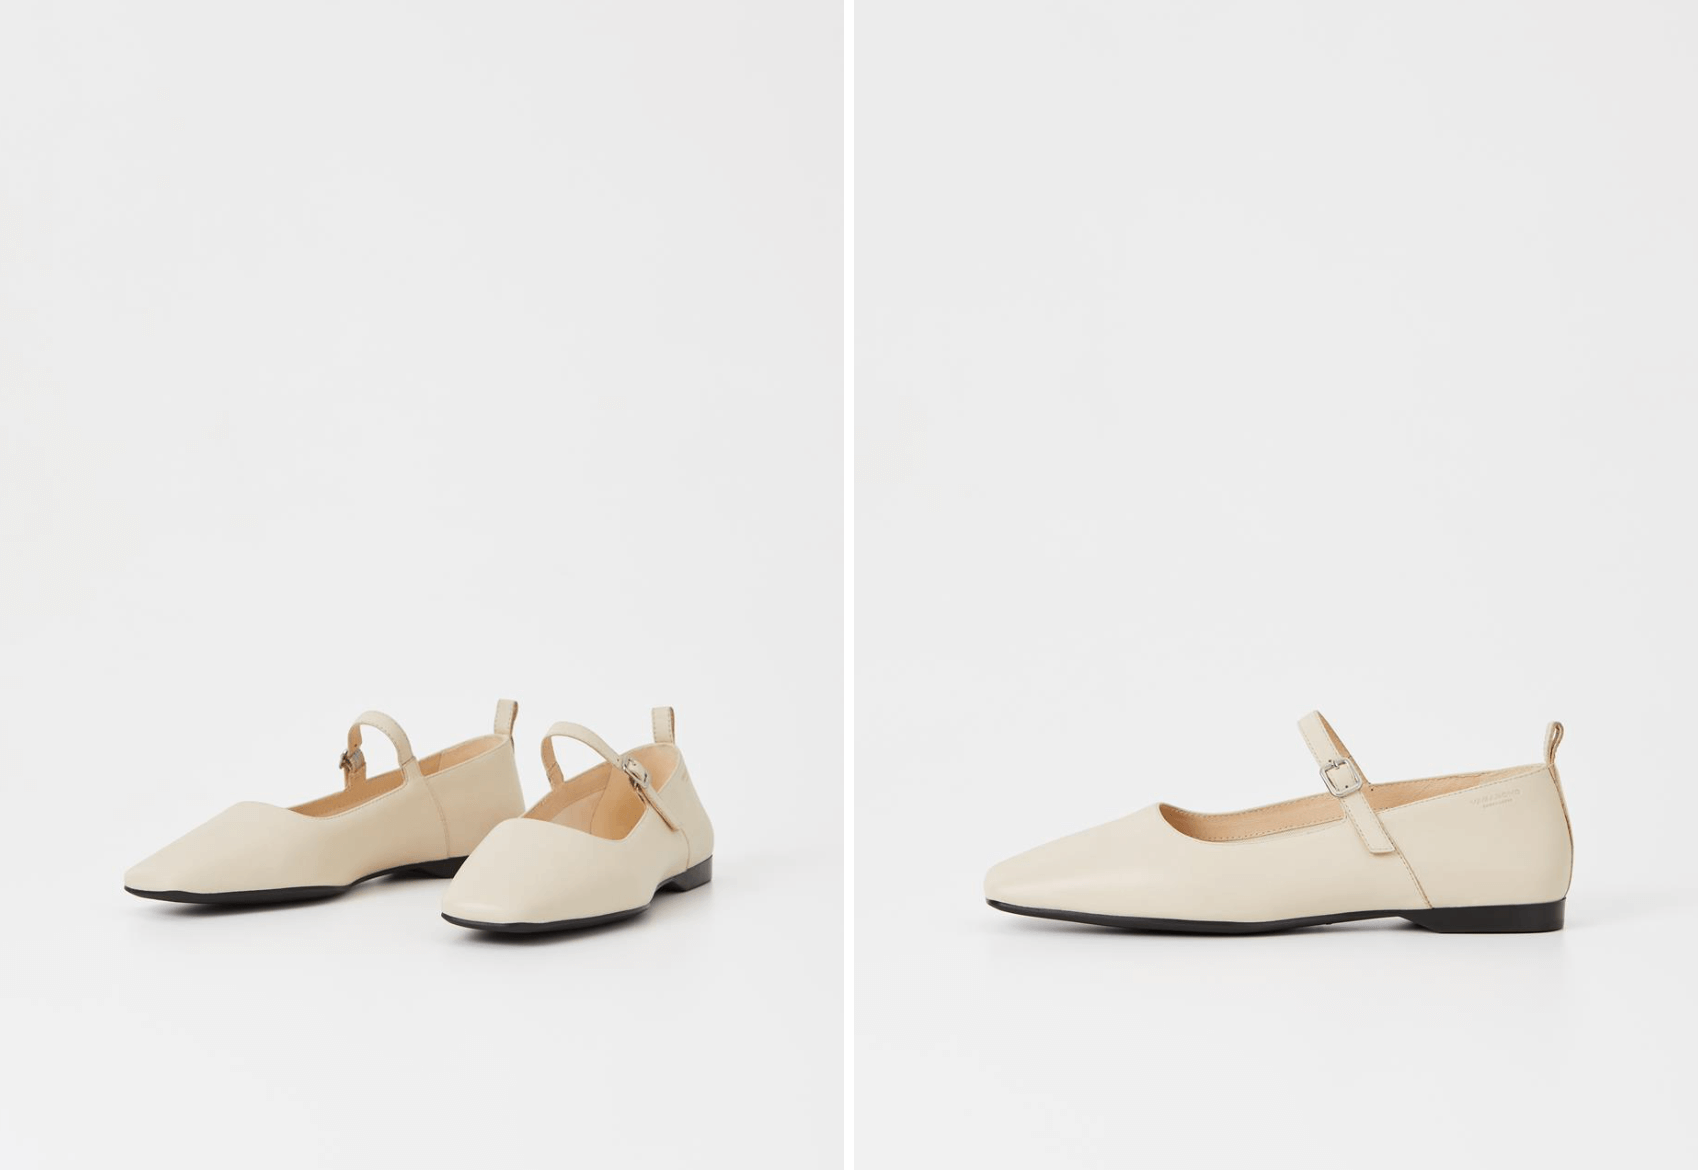 Vagabond, Delia shoe in off-white cow leather